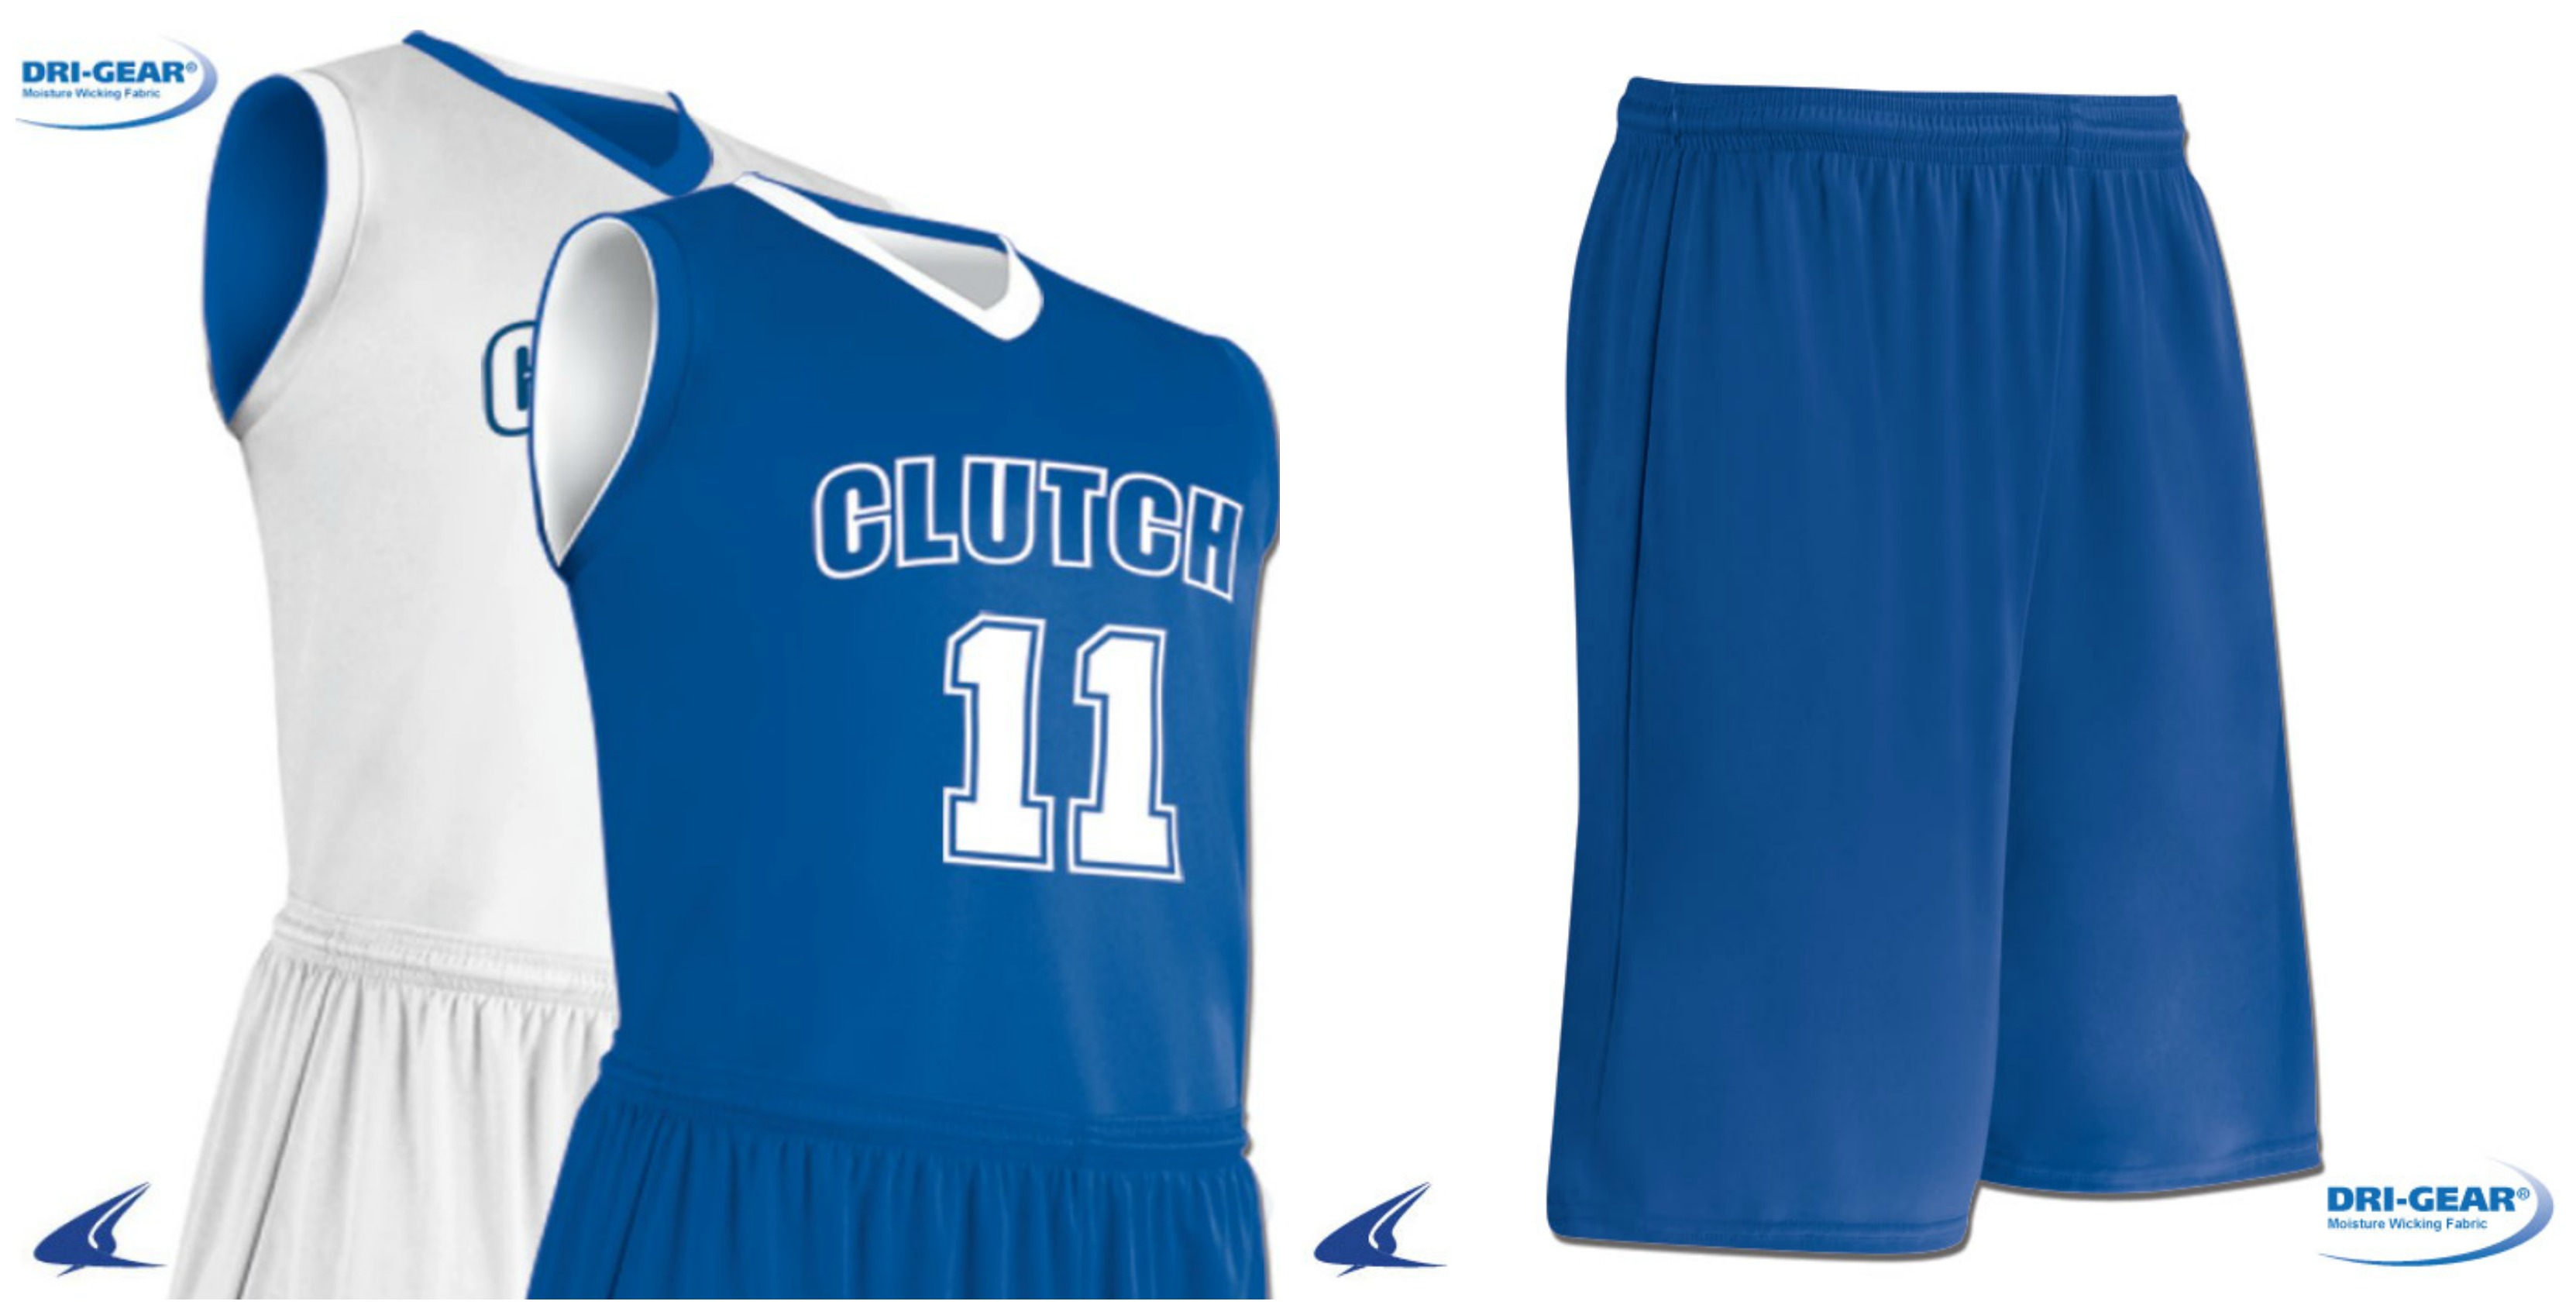 Men's Royal Blue Basketball Uniform Set